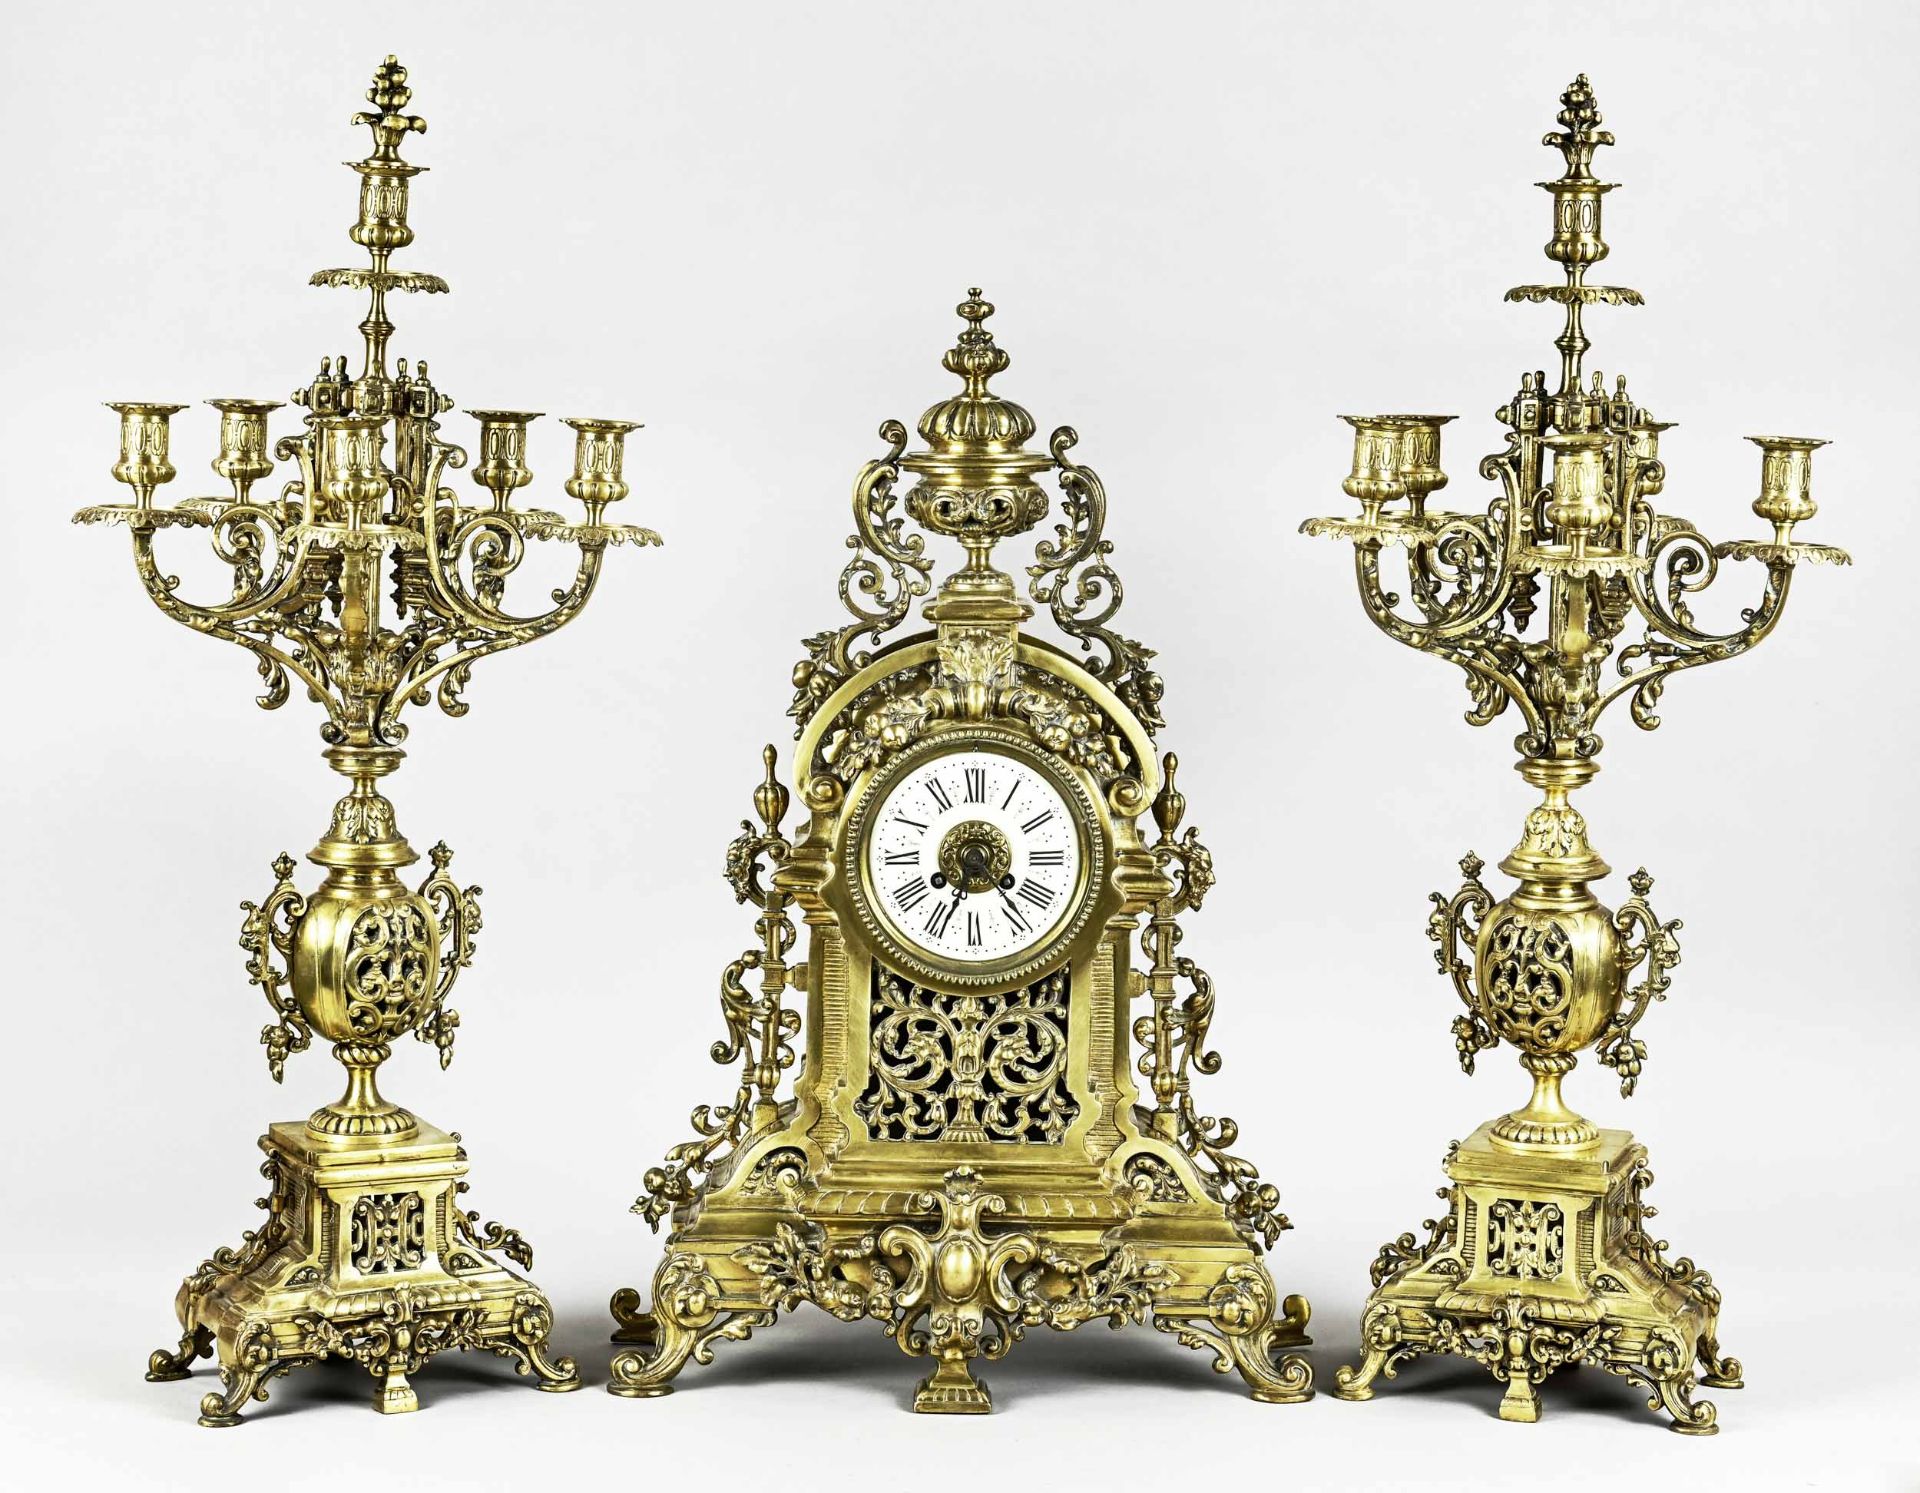 Impressive pendulum with 2 candlesticks as side plates, France around 1880, brass, great openwork, 